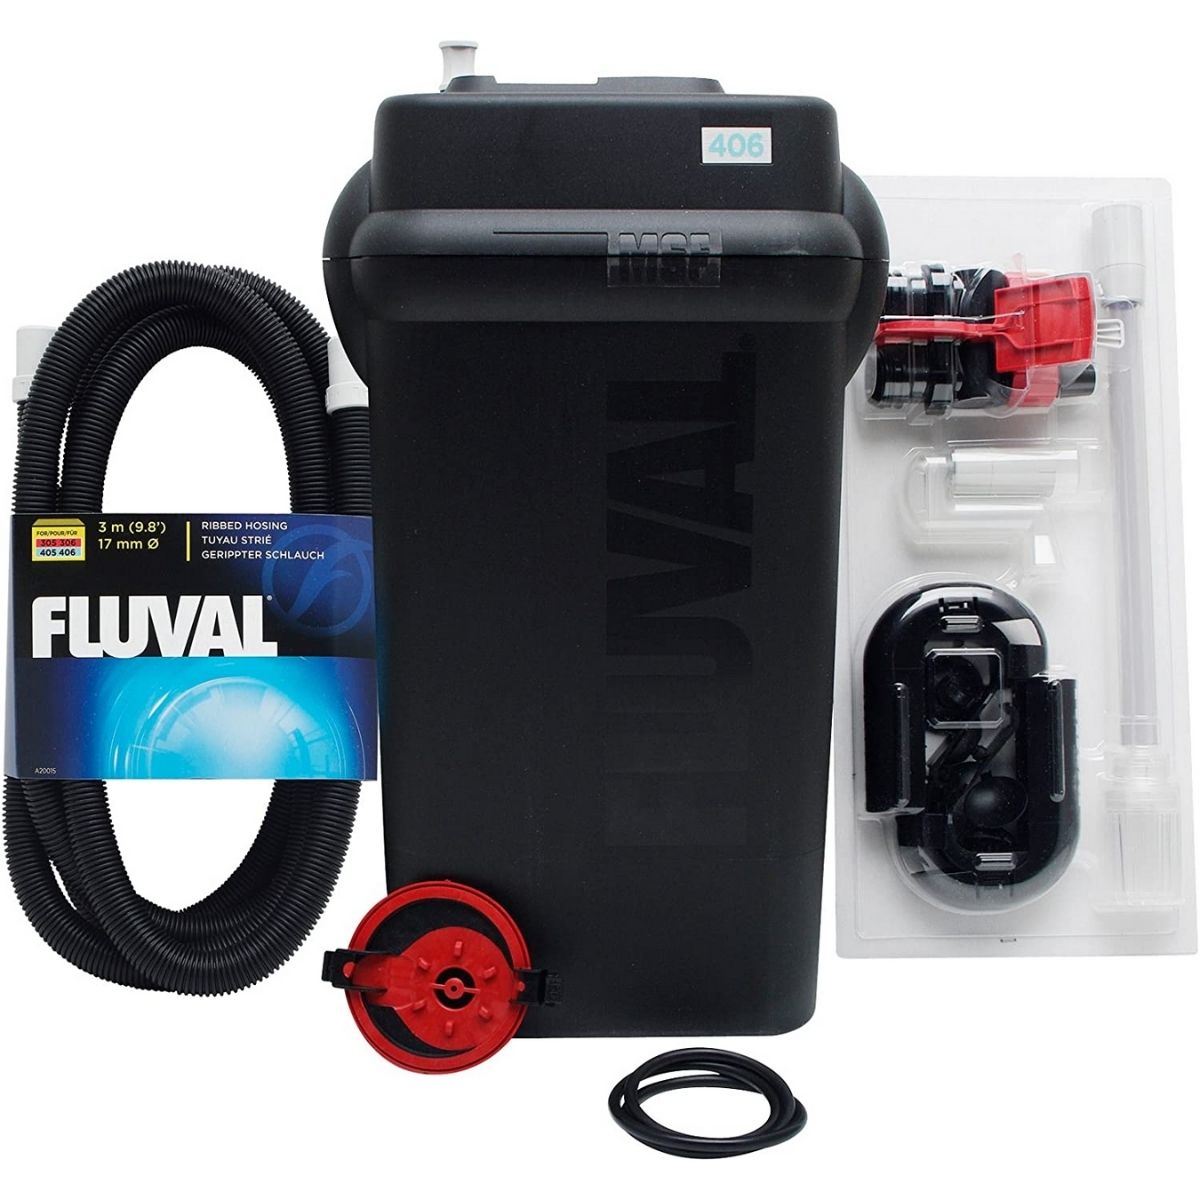 Fluval 406 Filter Review